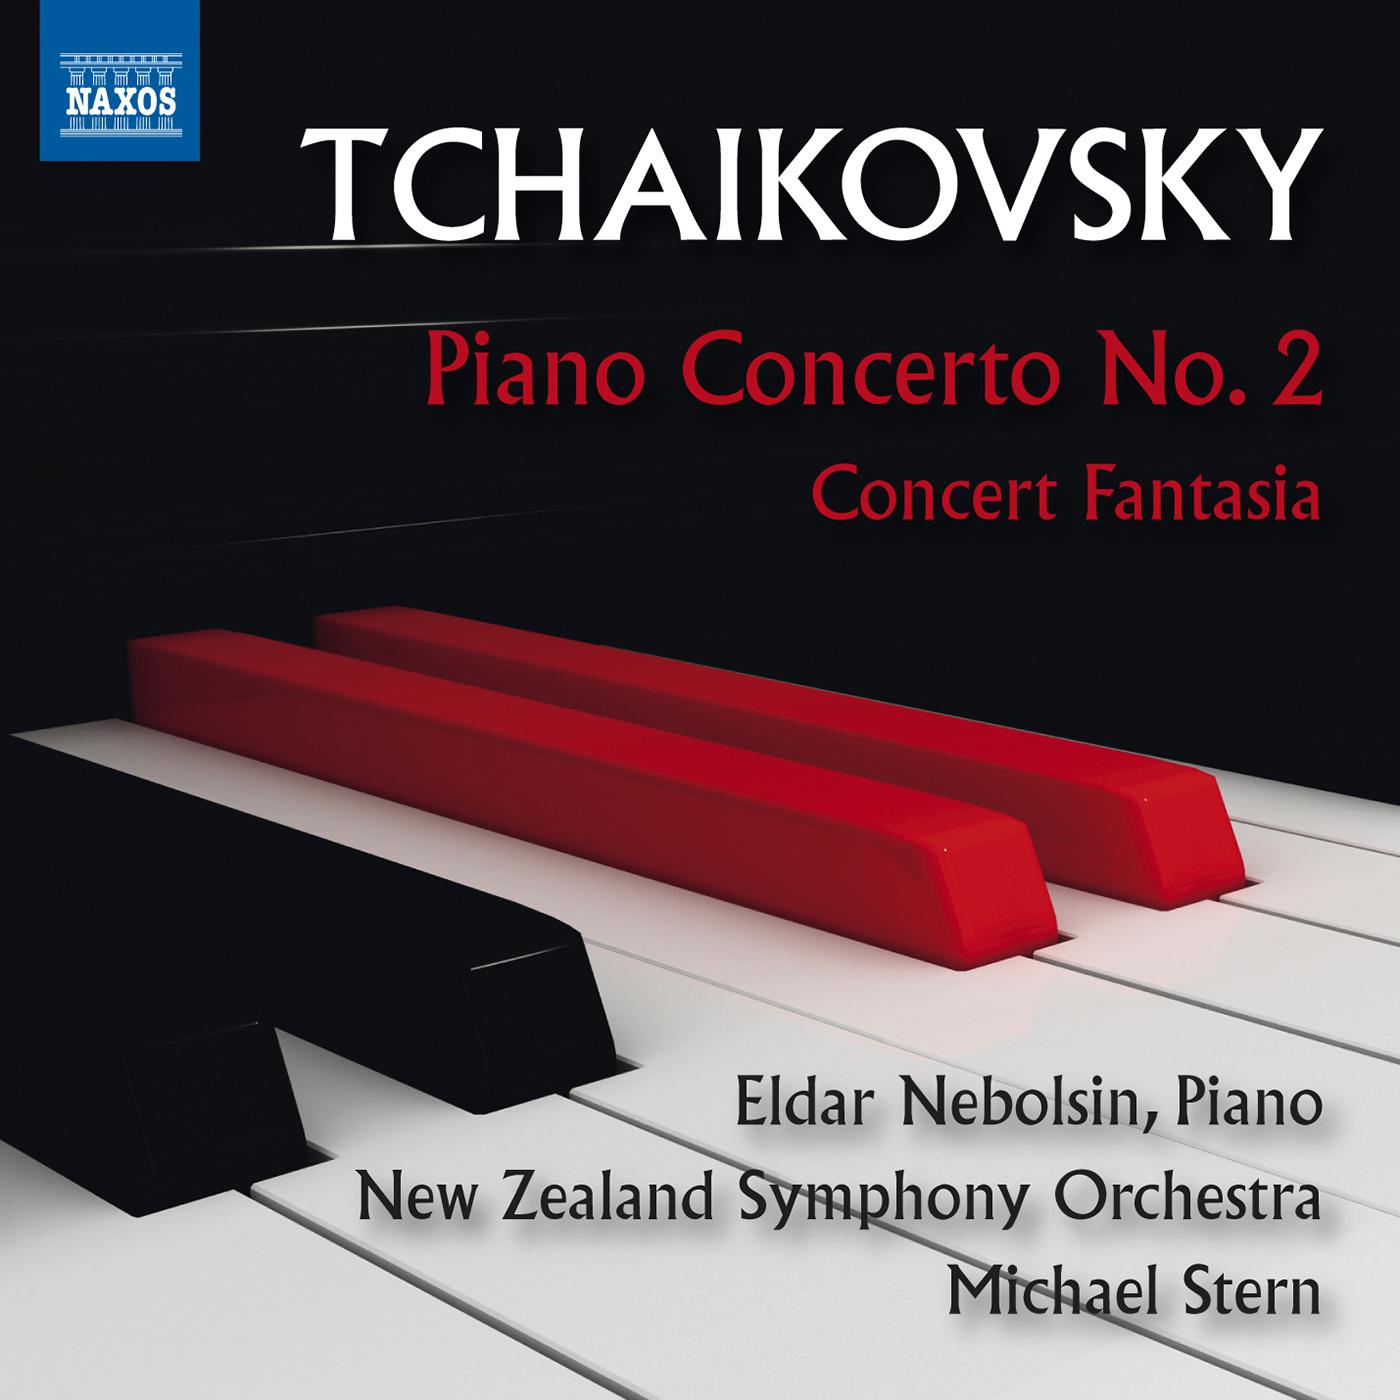 TCHAIKOVSKY, P.I.: Piano Concerto No. 2 / Concert Fantasia (Nebolsin, New Zealand Symphony, M. Stern)